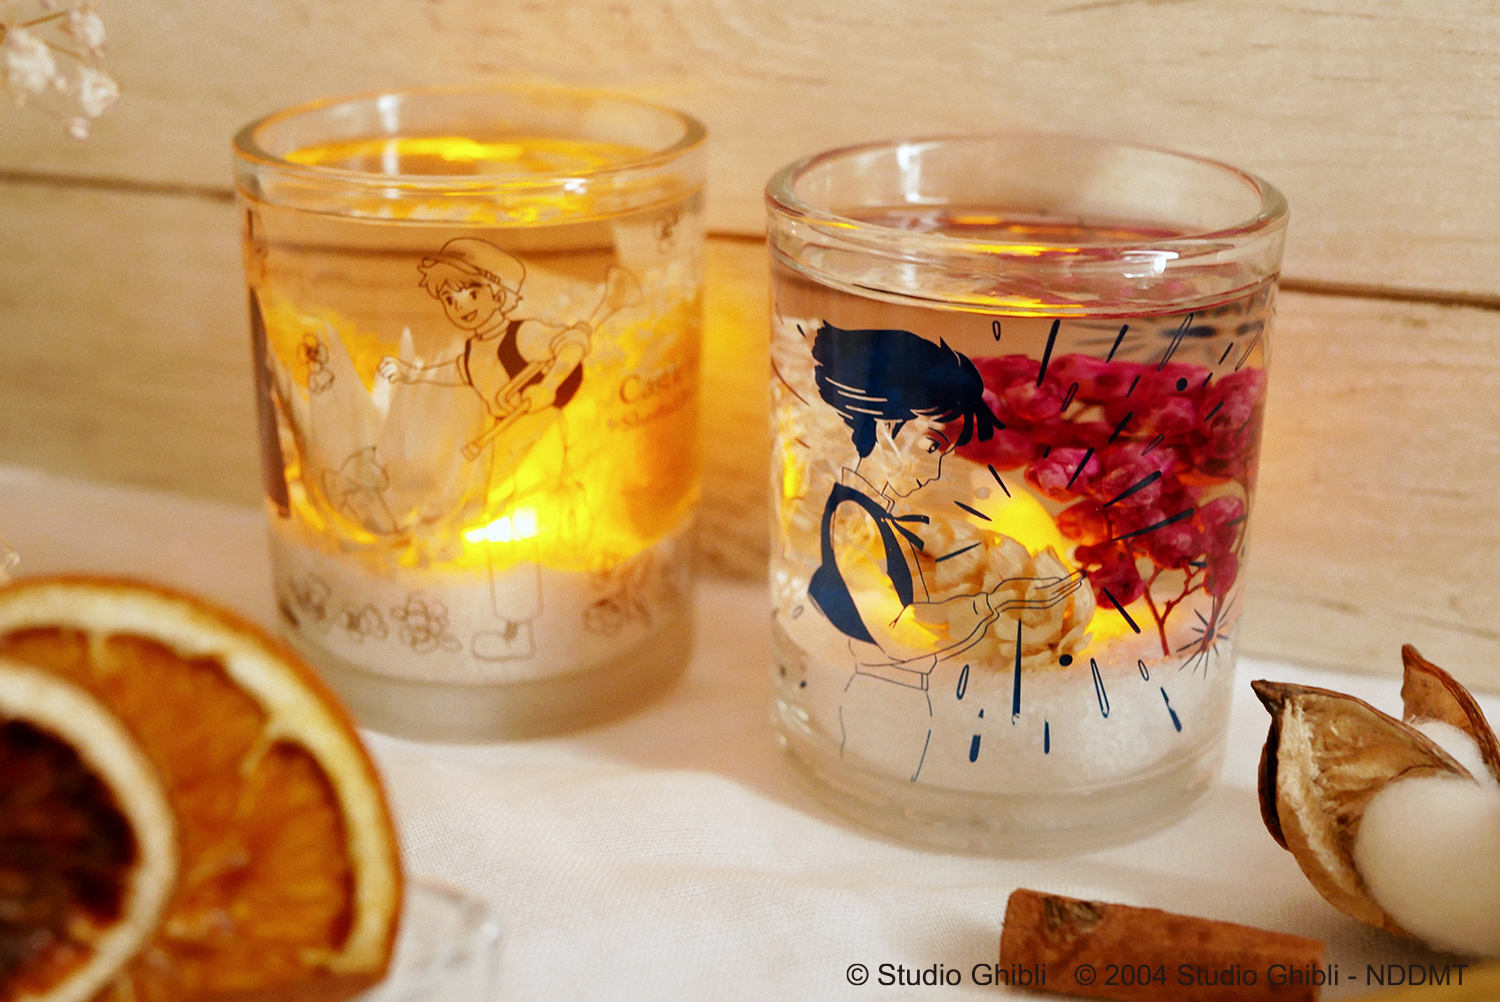 Ichinose, Chizuru | Anime Candles | Anime jewelry, Jewelry candles, What is  anime